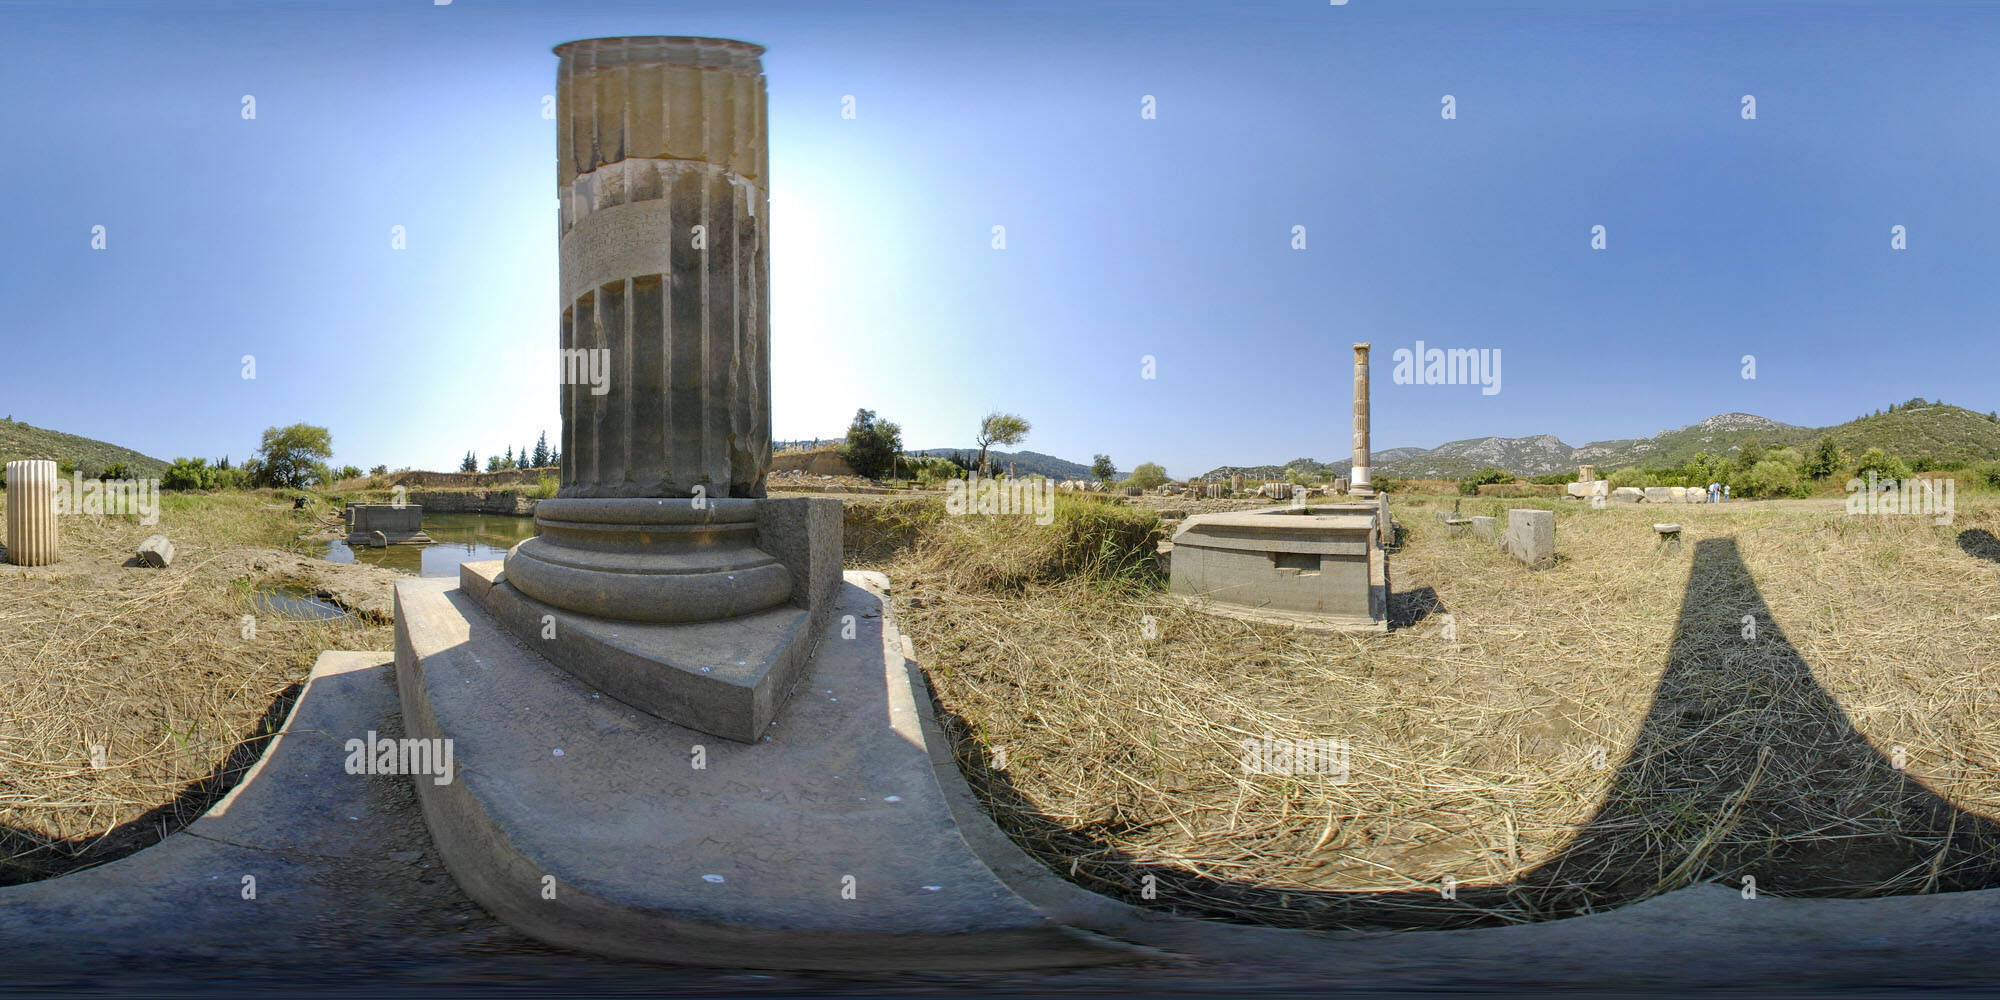 360 degree panoramic view of Klaros